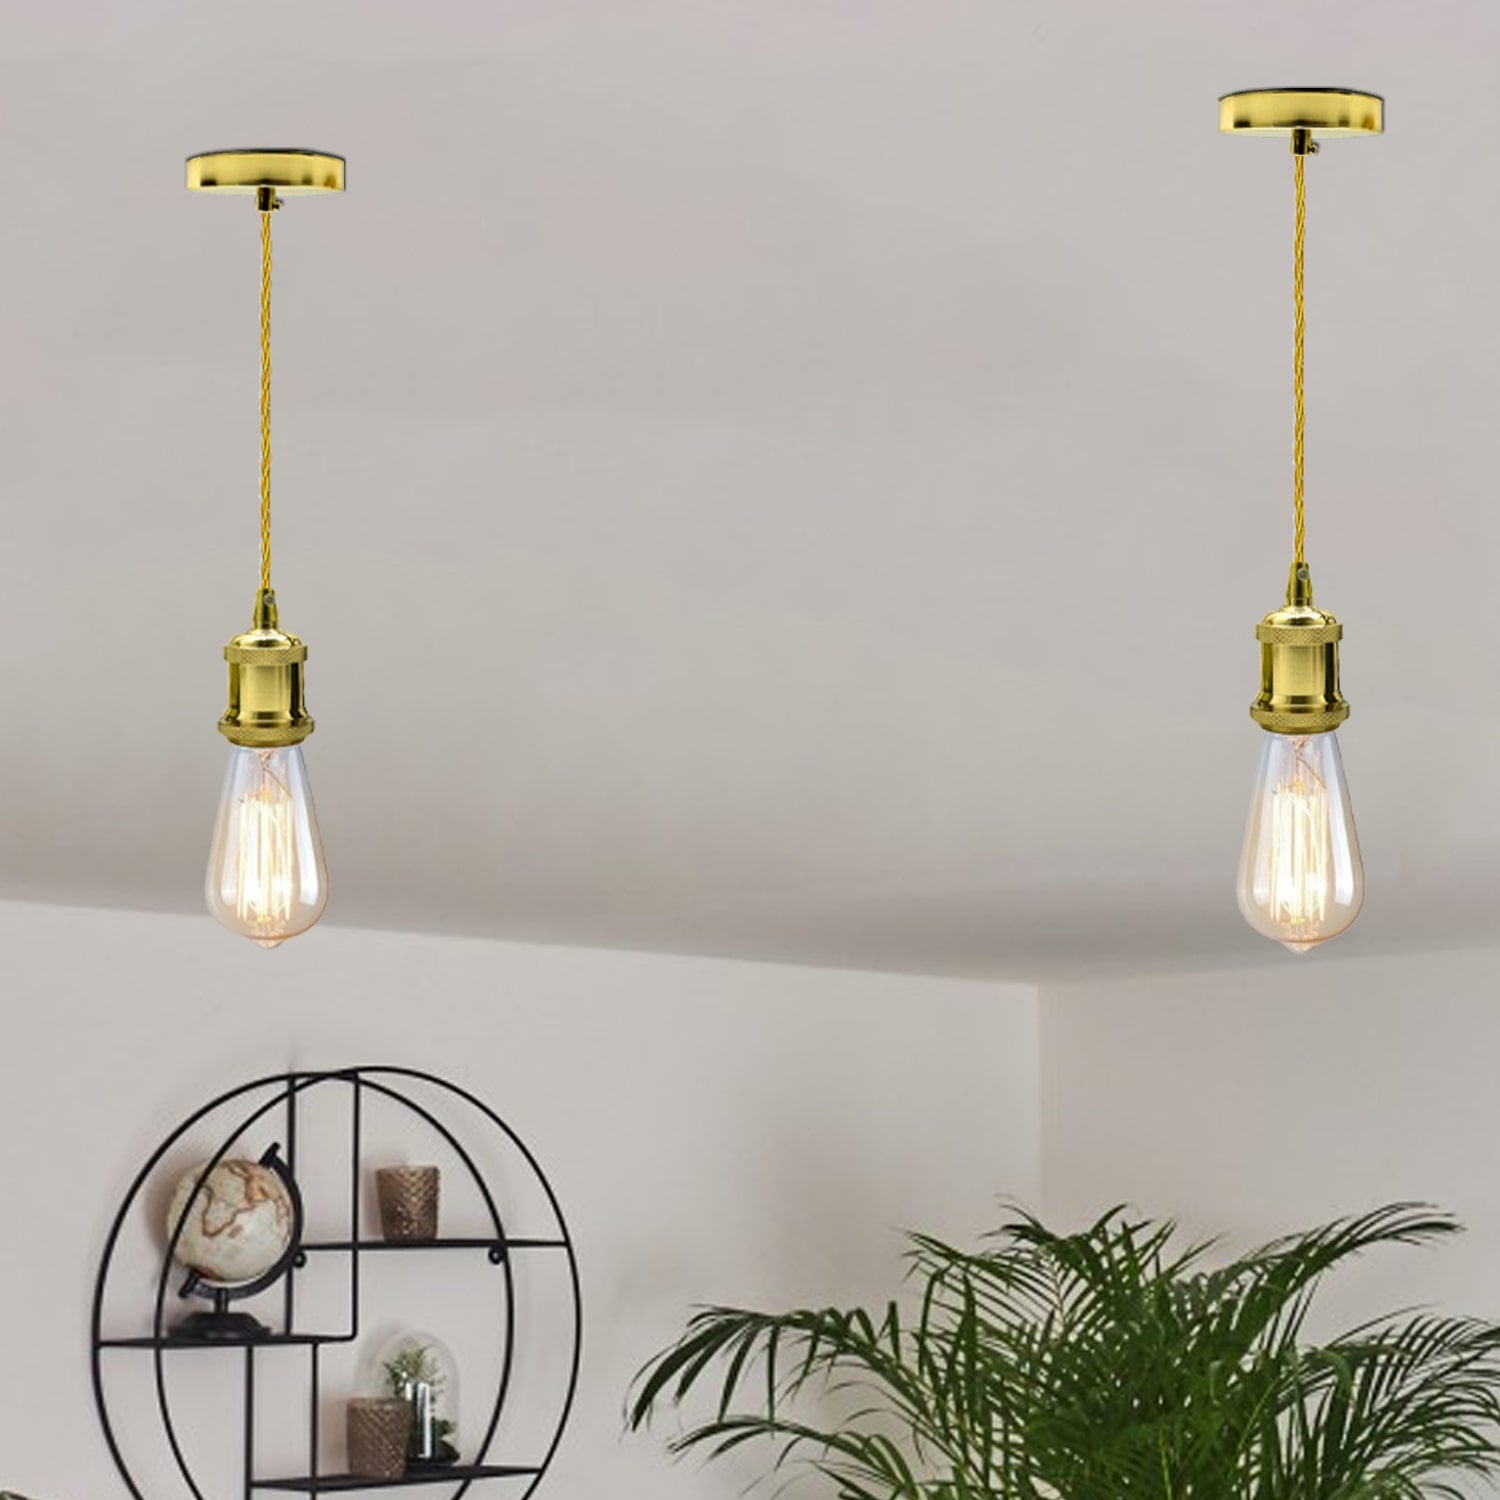 French Gold Vintage Metal Ceiling Light Fitting Gold Twisted Braided Flex 2m E27 Lamp Holder Suspended Pendant Light Fitting Kit for Indoor Lightings